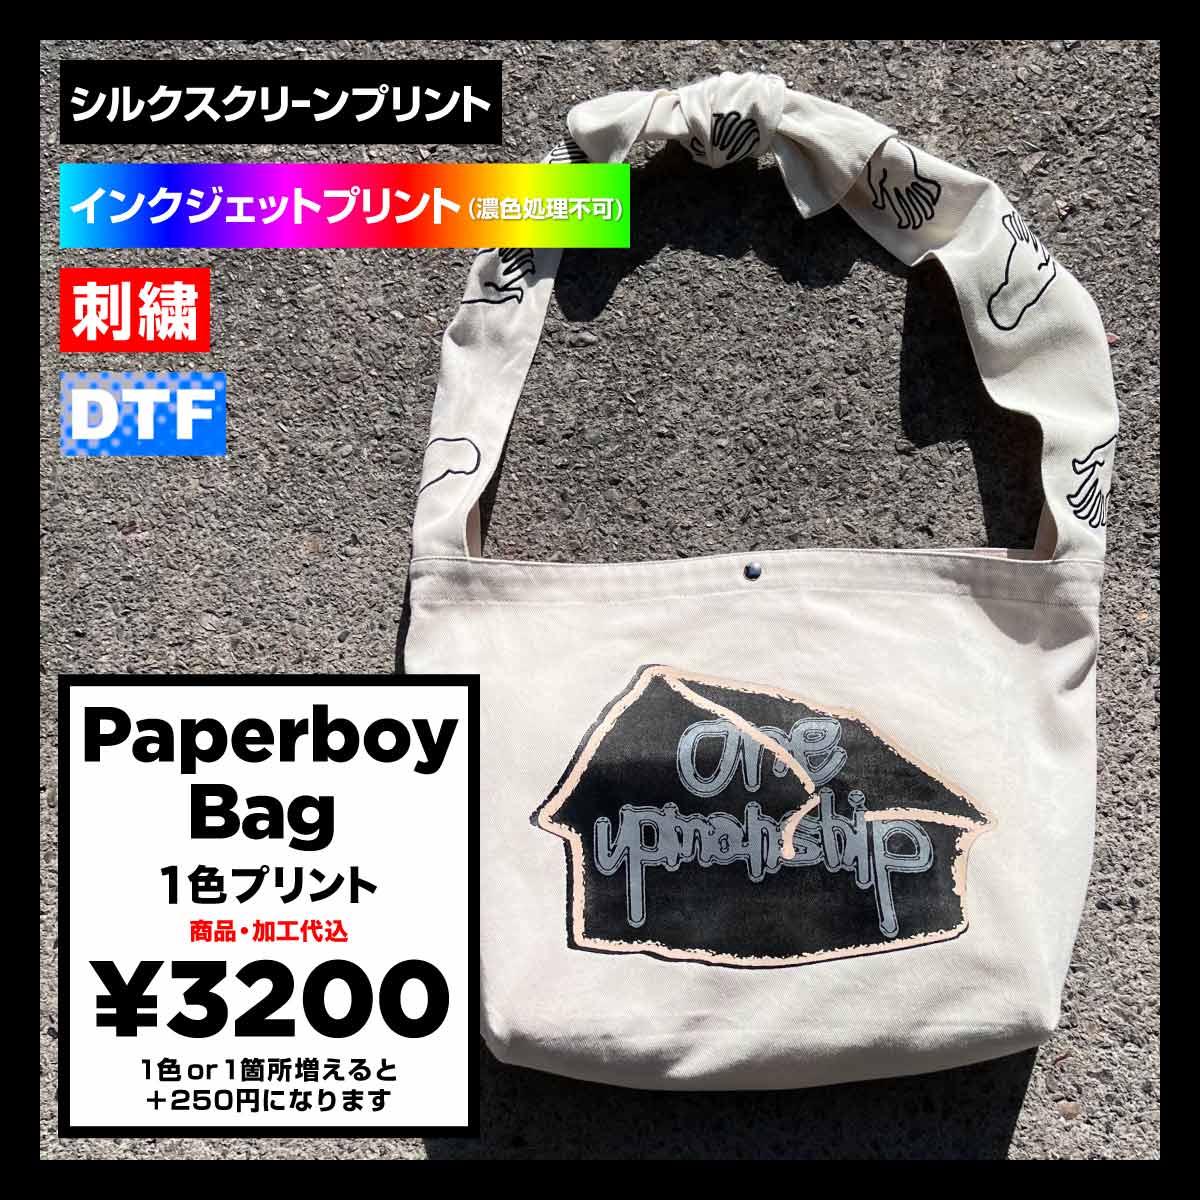 Paperboy Bag (品番CPSEW017)